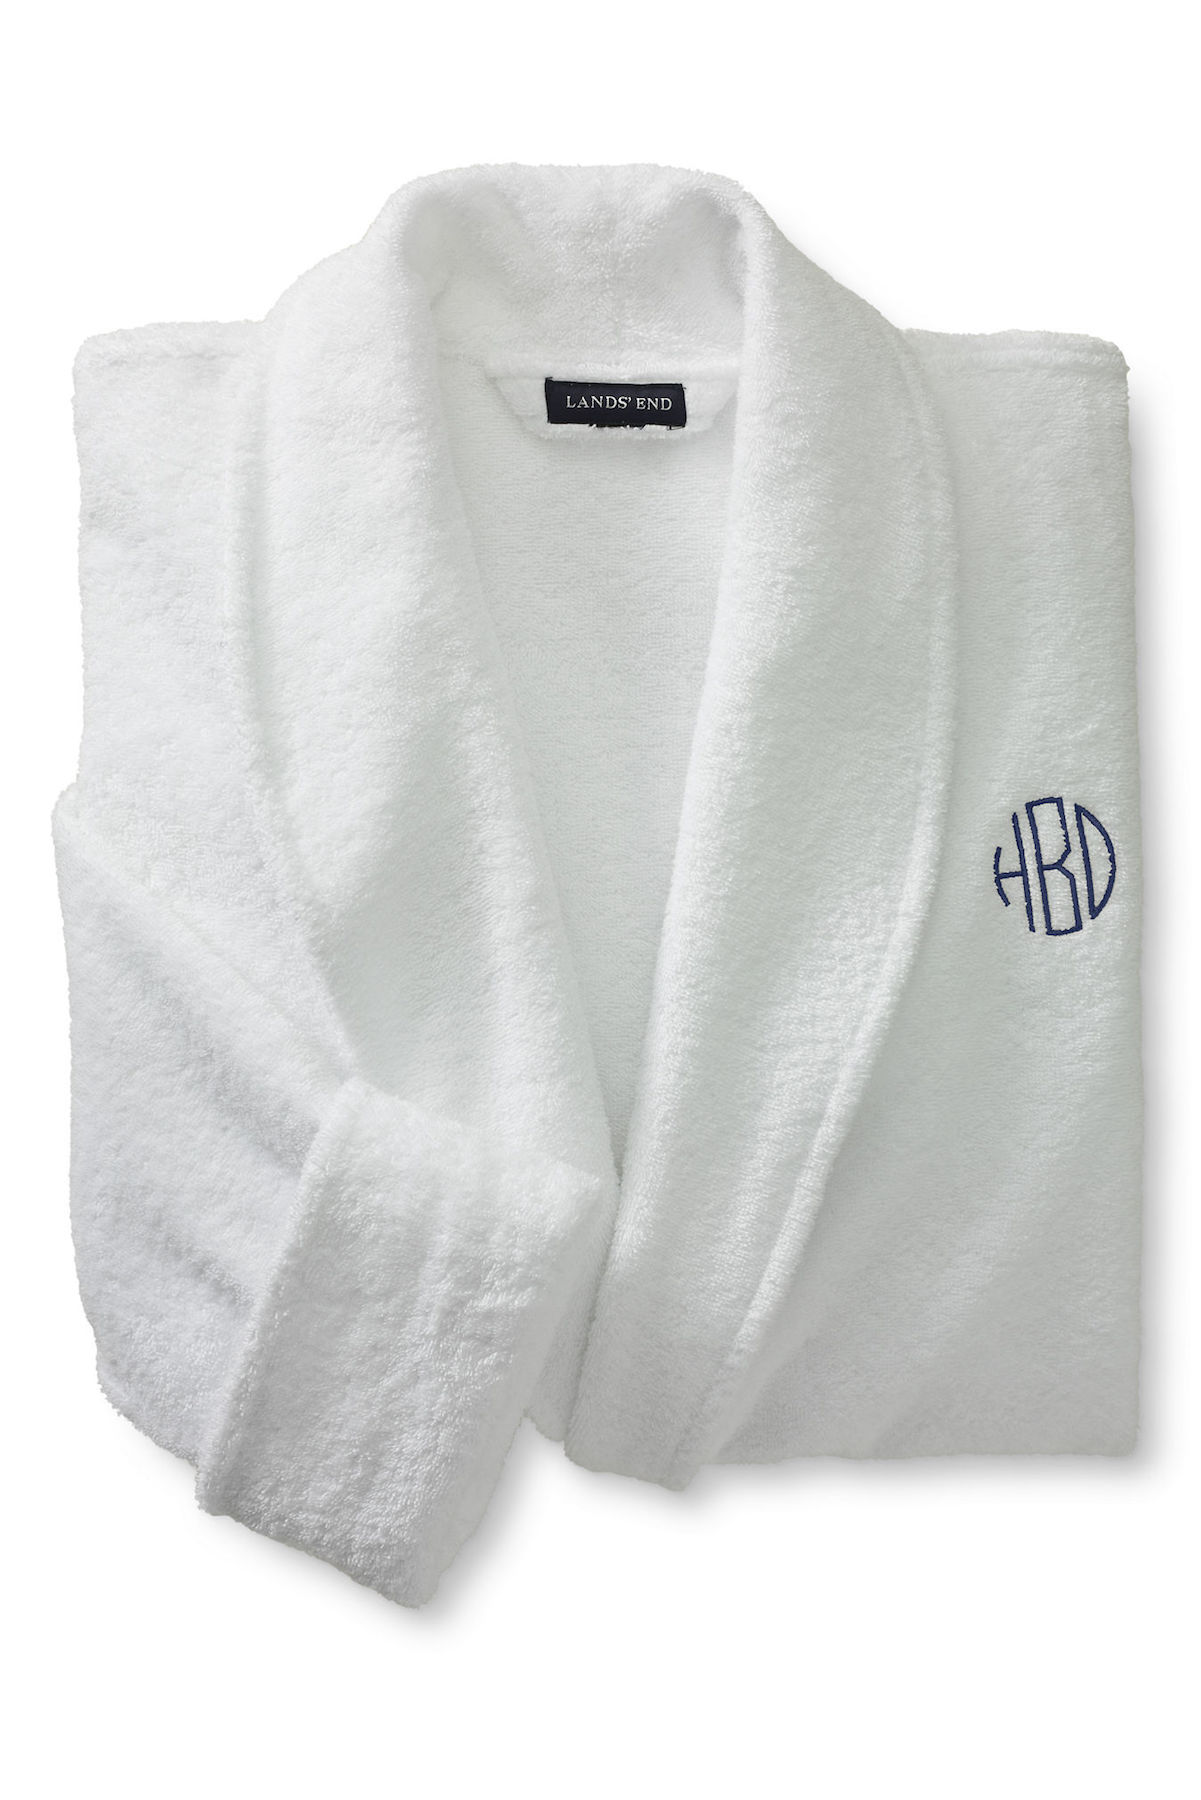 A Good Terry Cloth Bathrobe – George Hahn